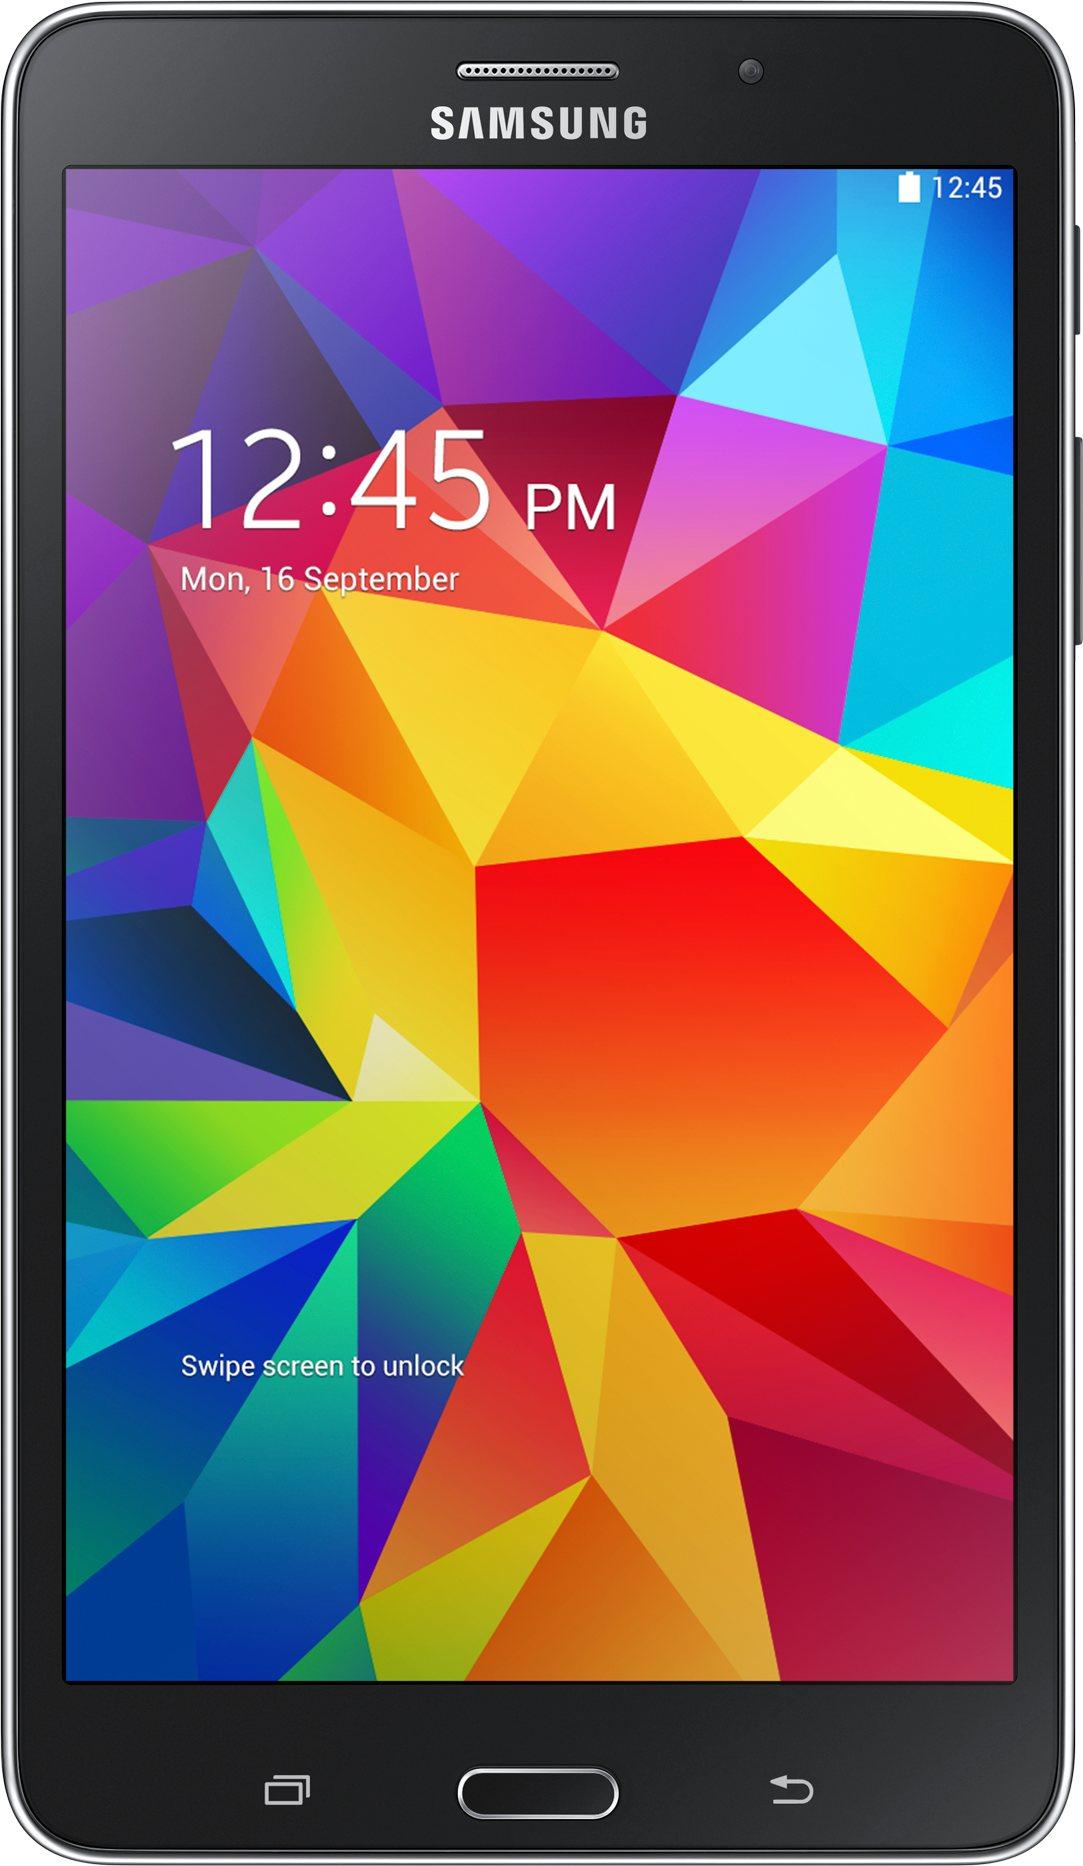 Galaxy Tab 4 7.0 (LTE) SM-T235